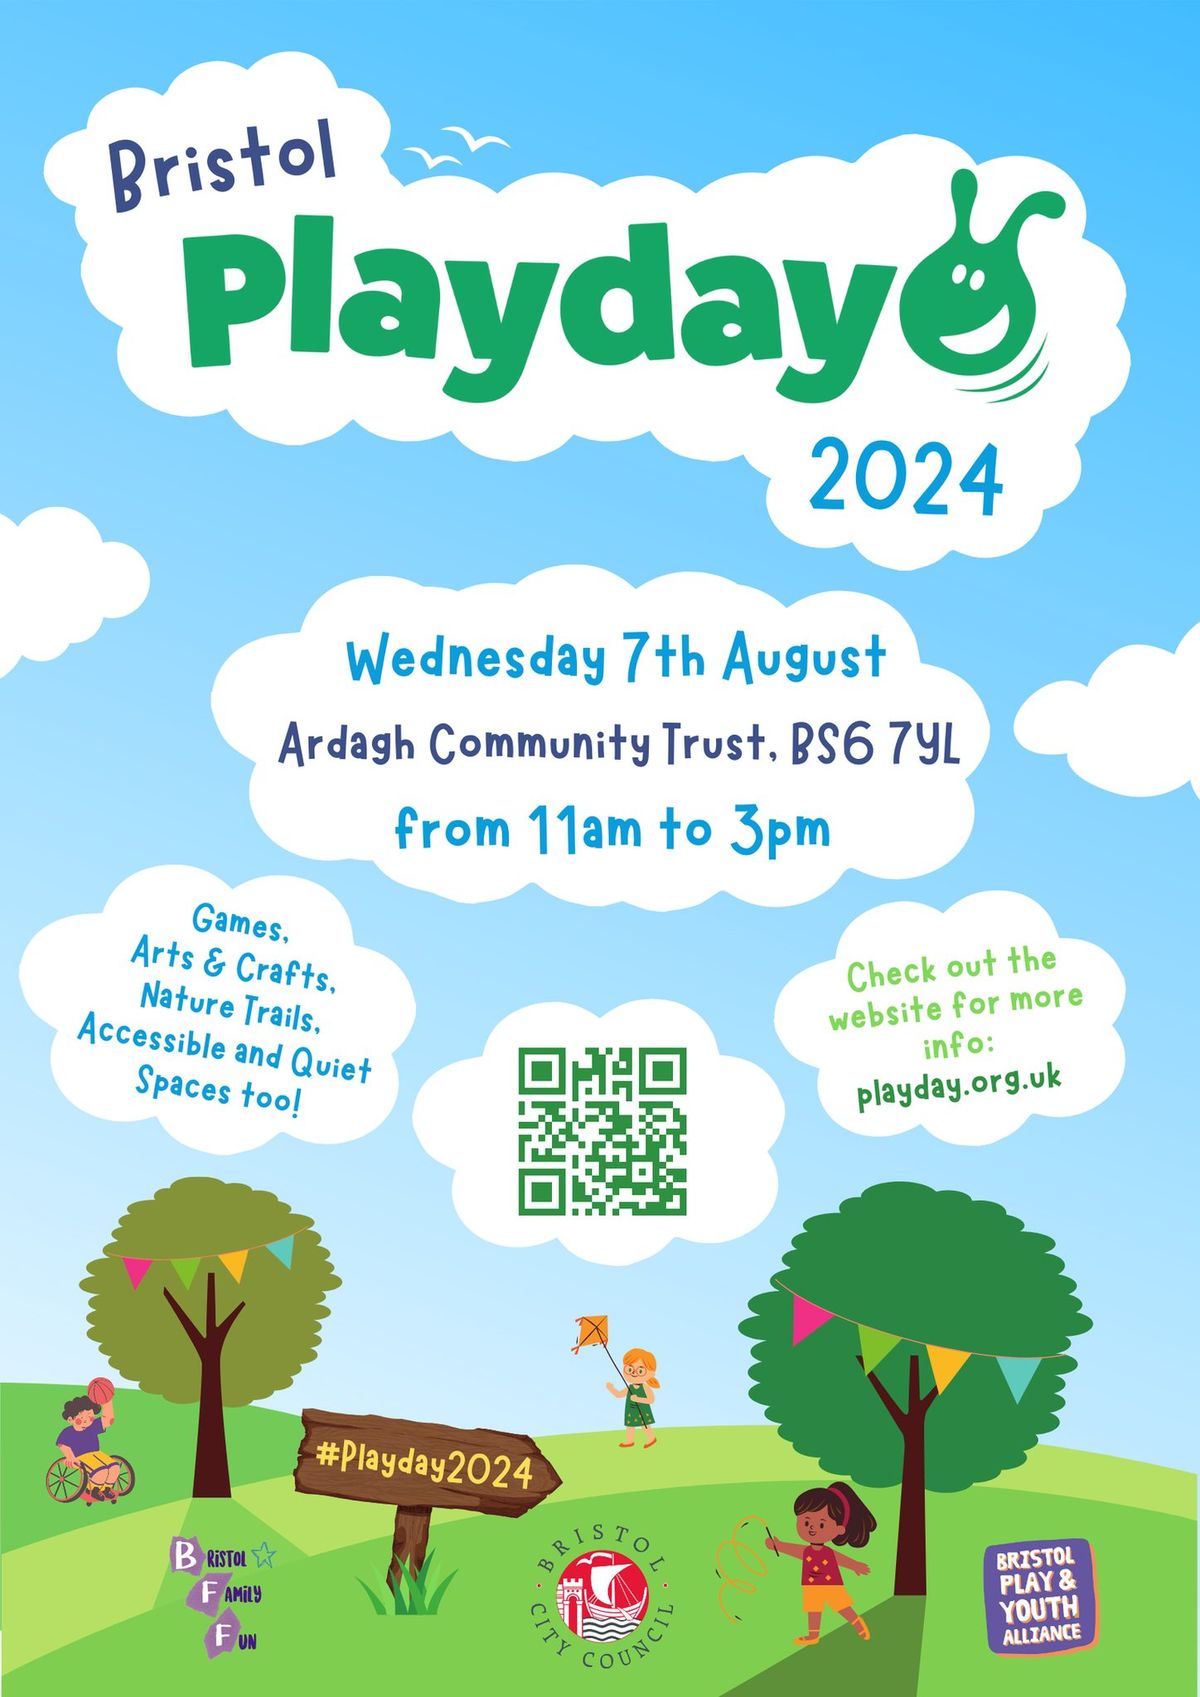 Bristol Playday 2024 - At the Ardagh